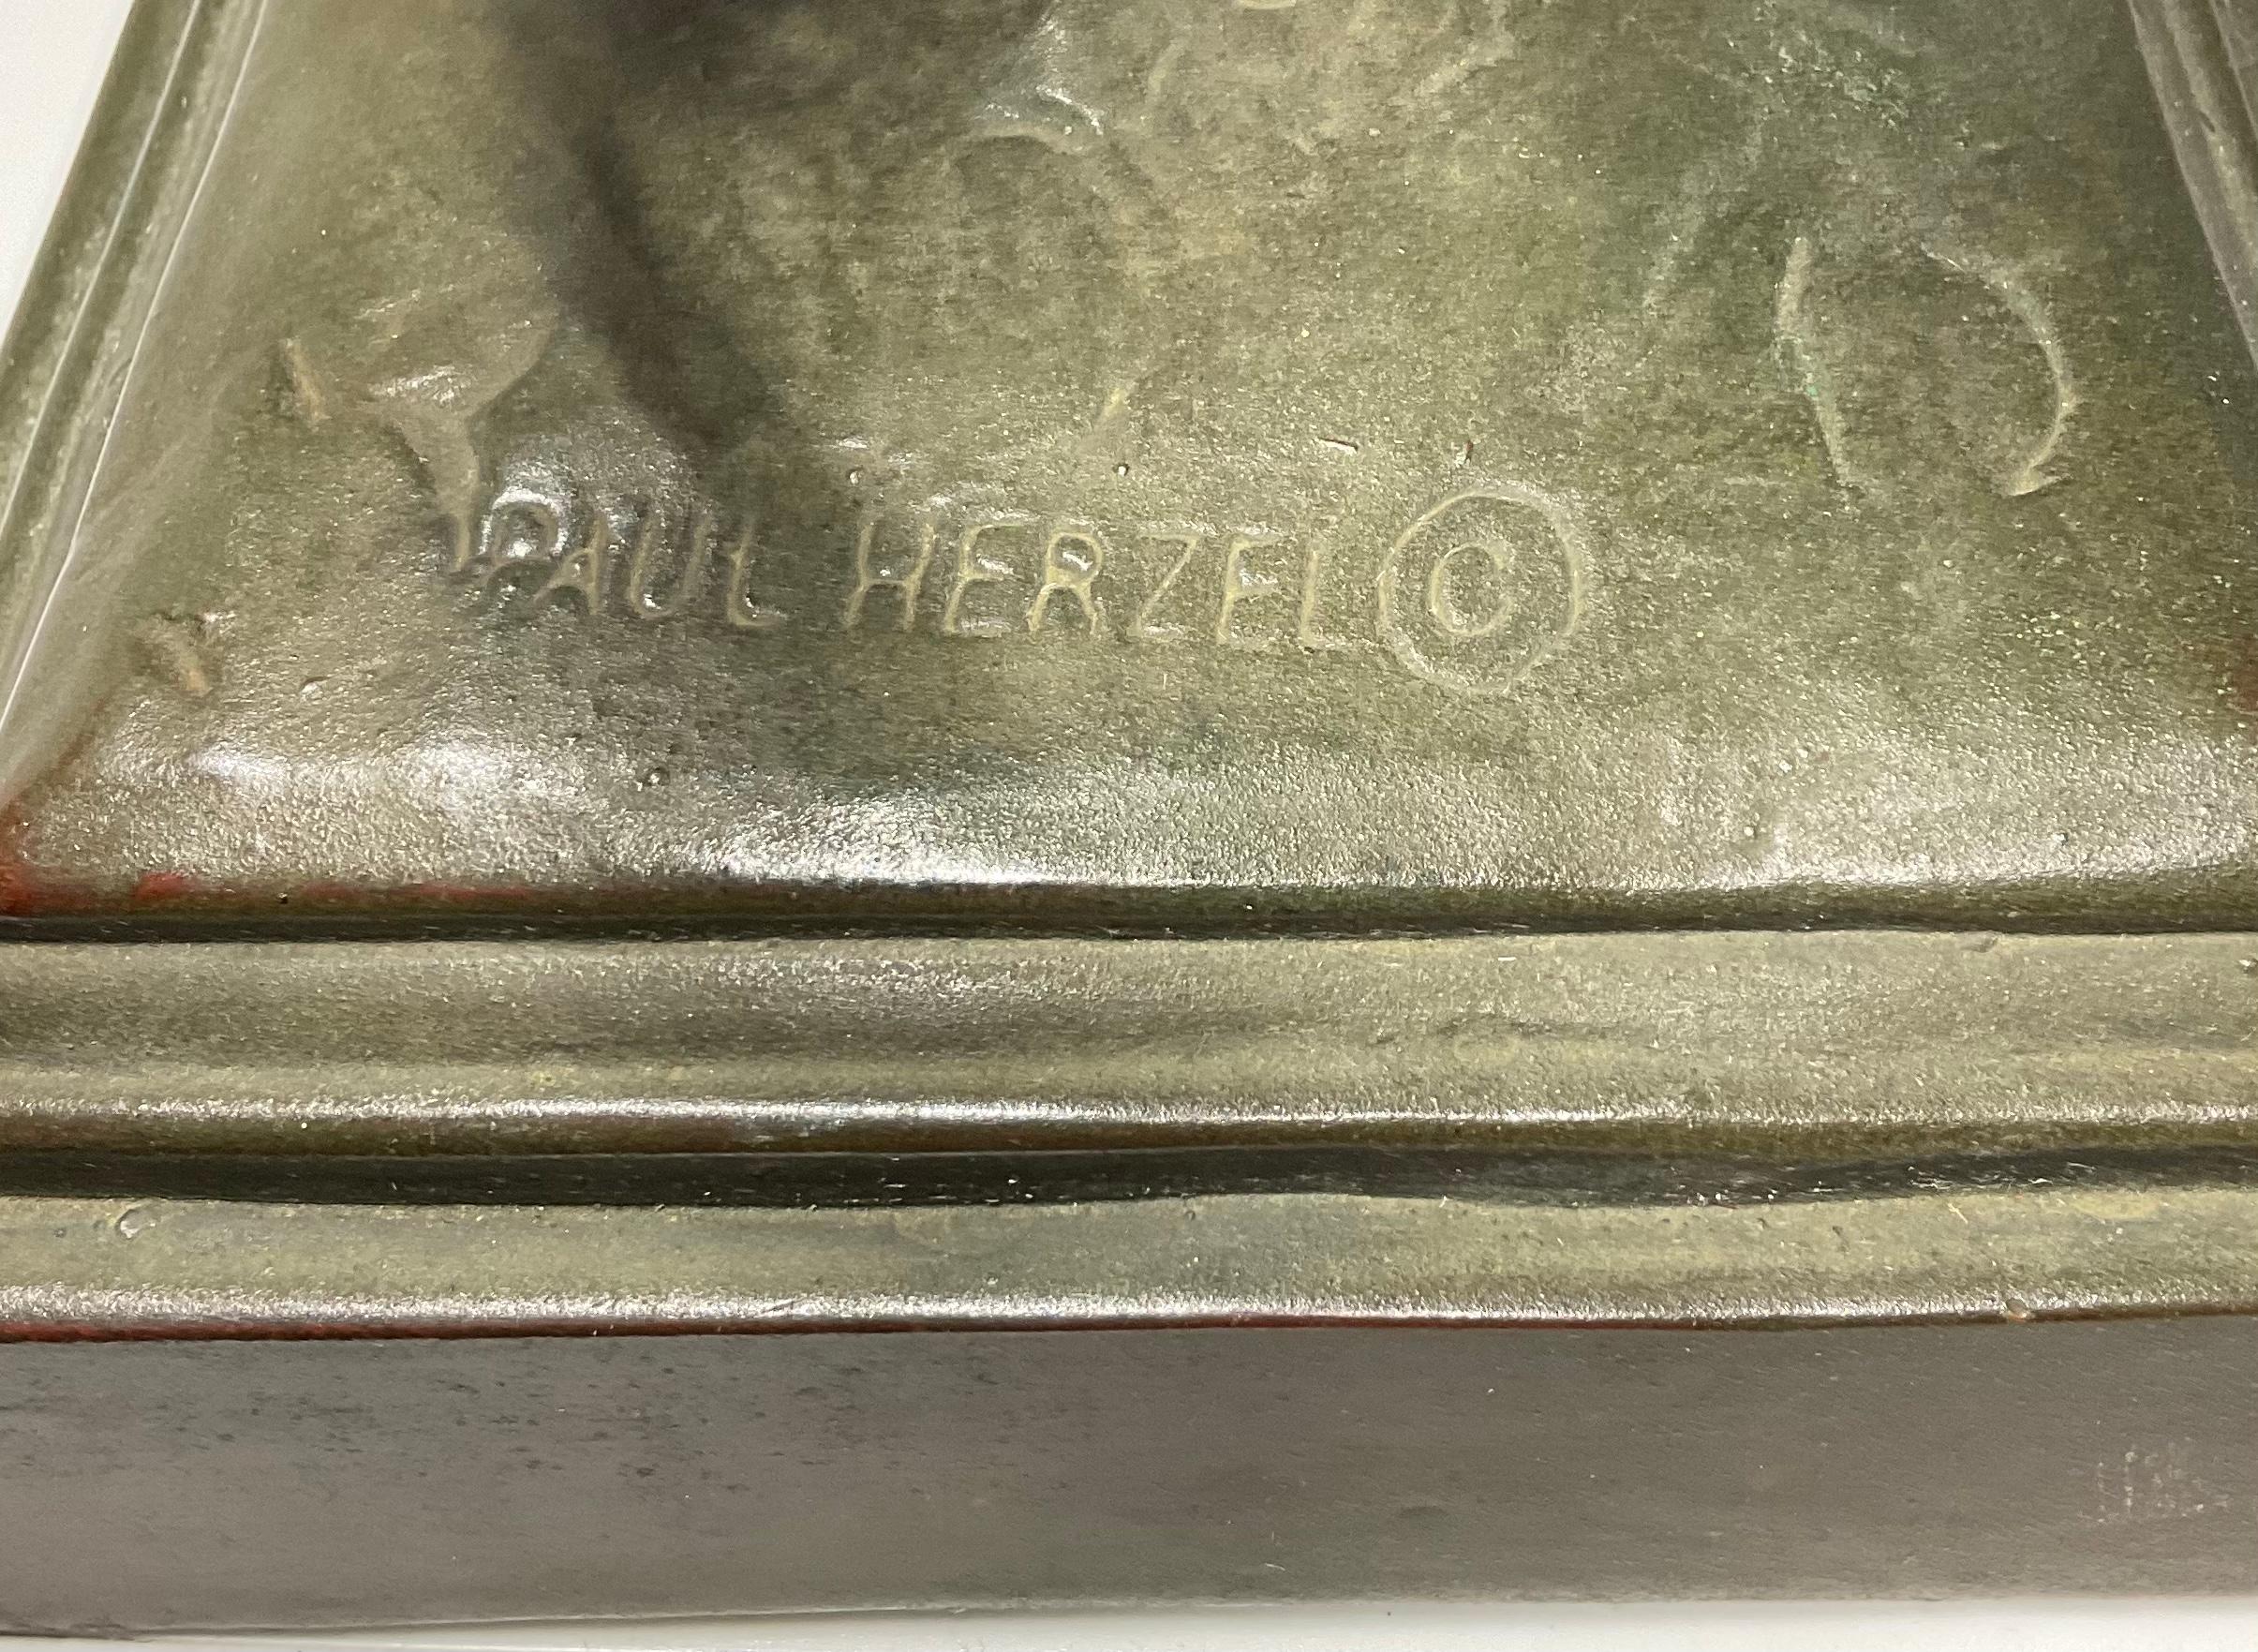 Paul Herzel Patinated Bronze Sculpture of “Hot-Blooded”Horses 2